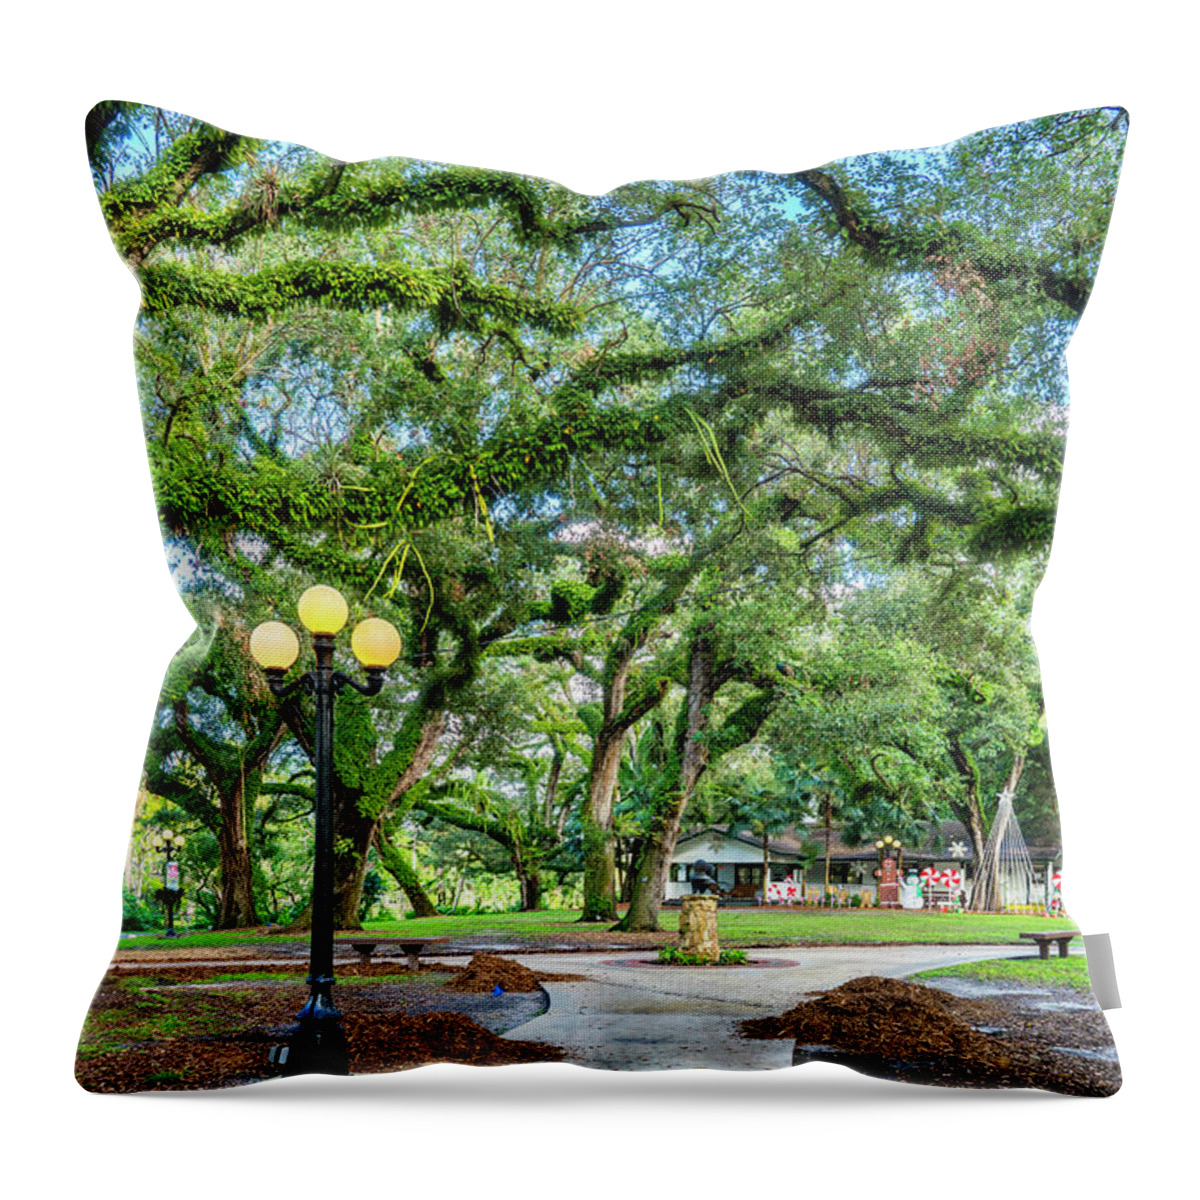 Estock Throw Pillow featuring the digital art Flamingo Gardens In Davie Florida by Laura Zeid